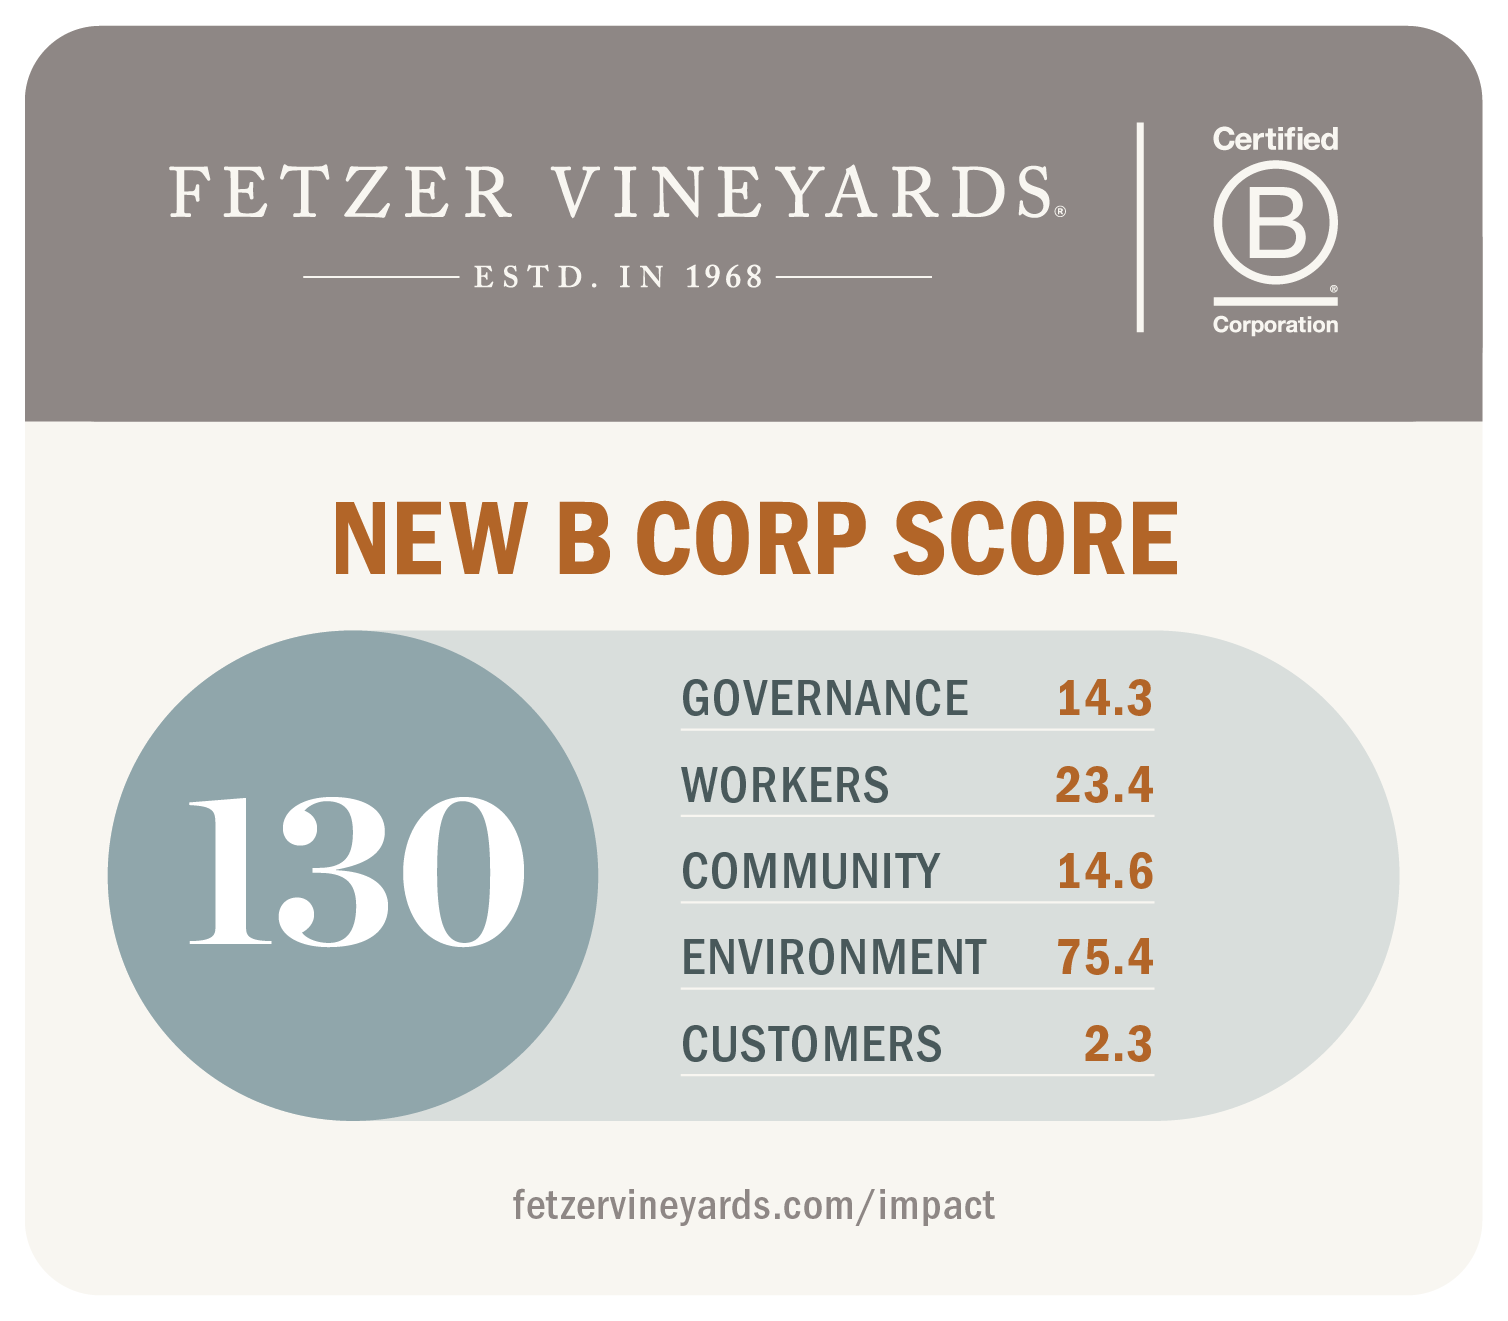 Fetzer Vineyards' New B Corp Score of 130